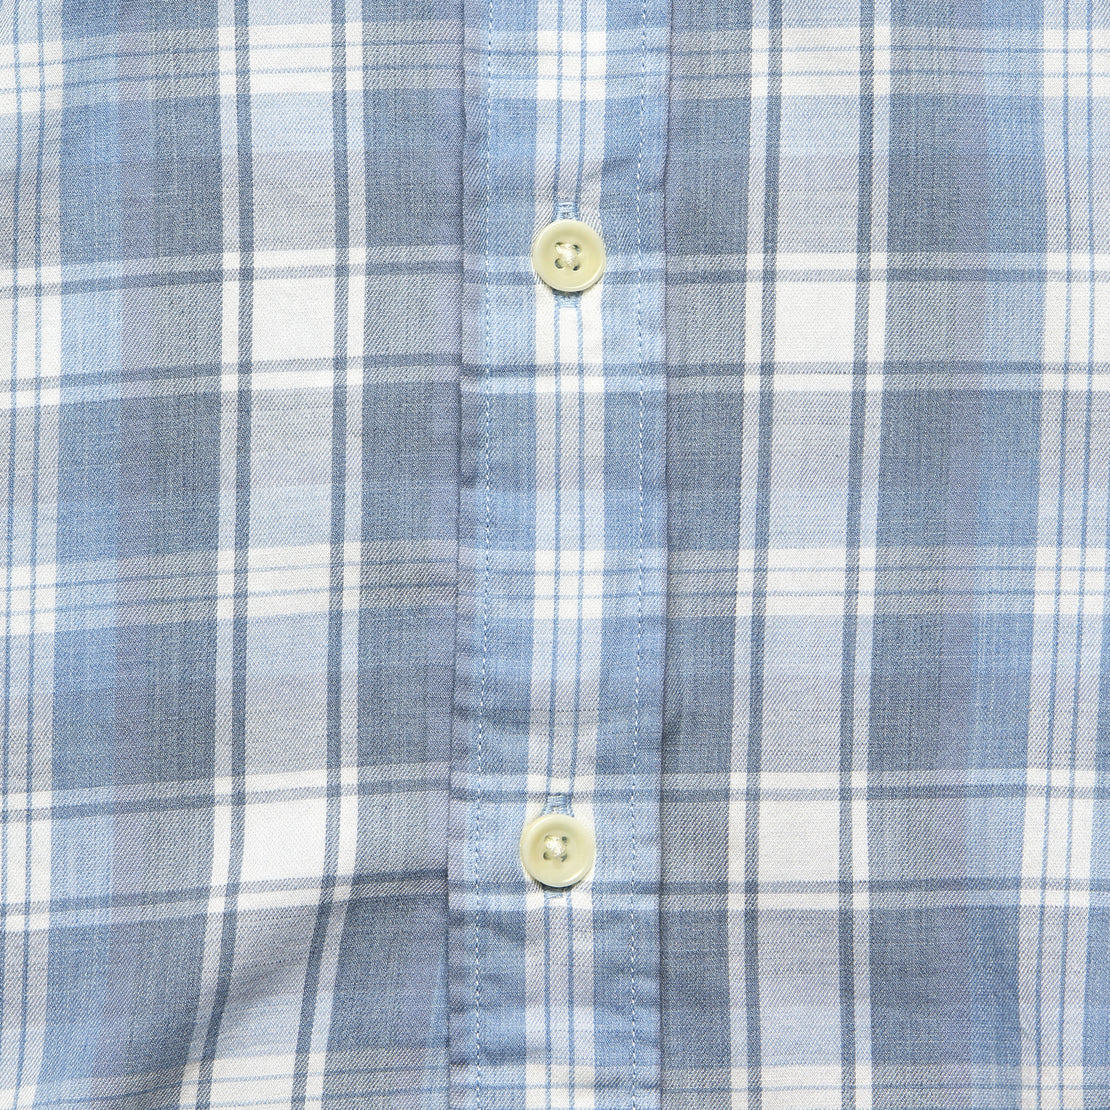 Movement Shirt - Marina Plaid - Faherty - STAG Provisions - Tops - L/S Woven - Plaid